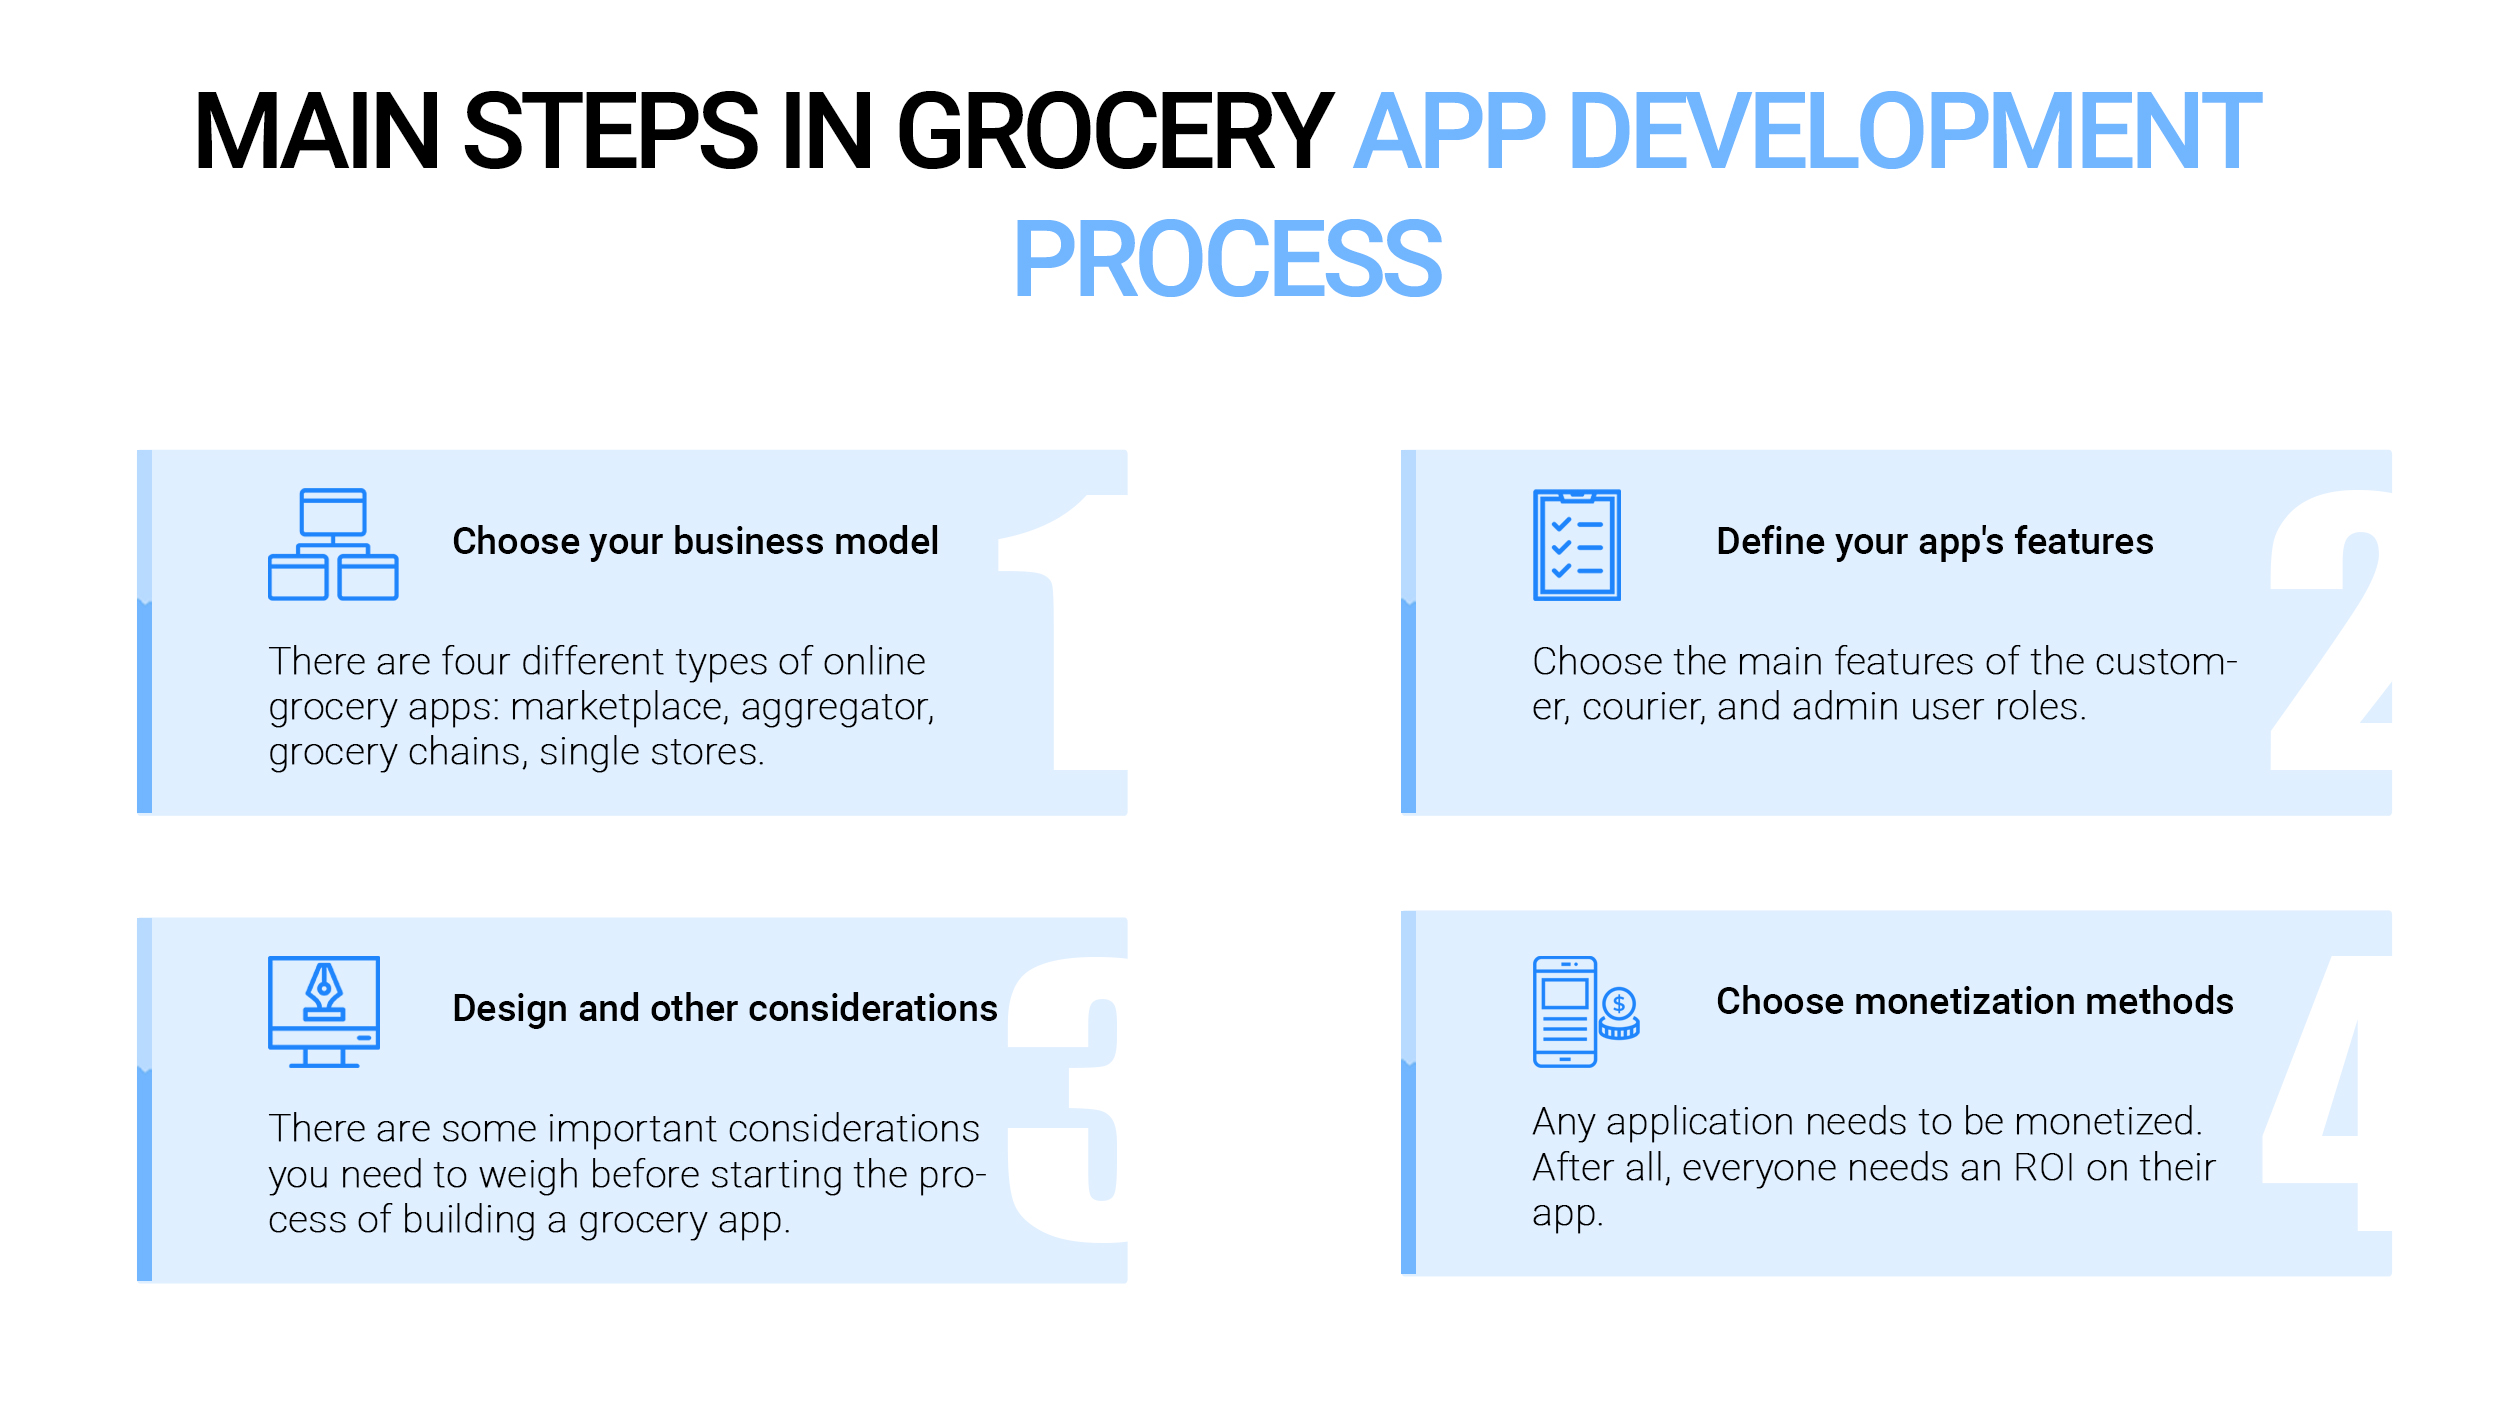 Main steps in grocery app development process